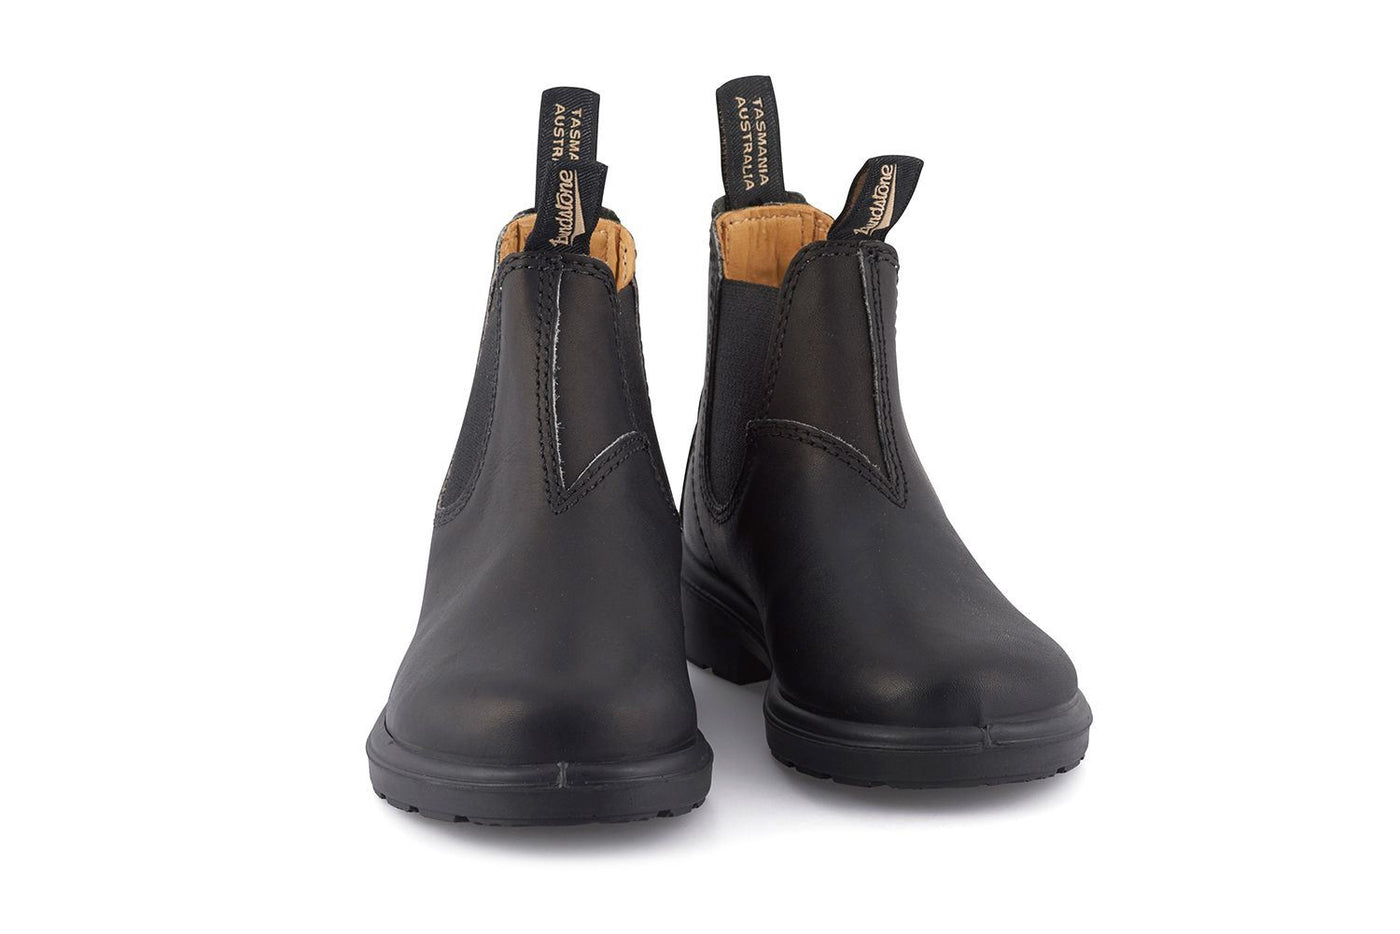 Blundstone #531 Kids Black Leather Boot